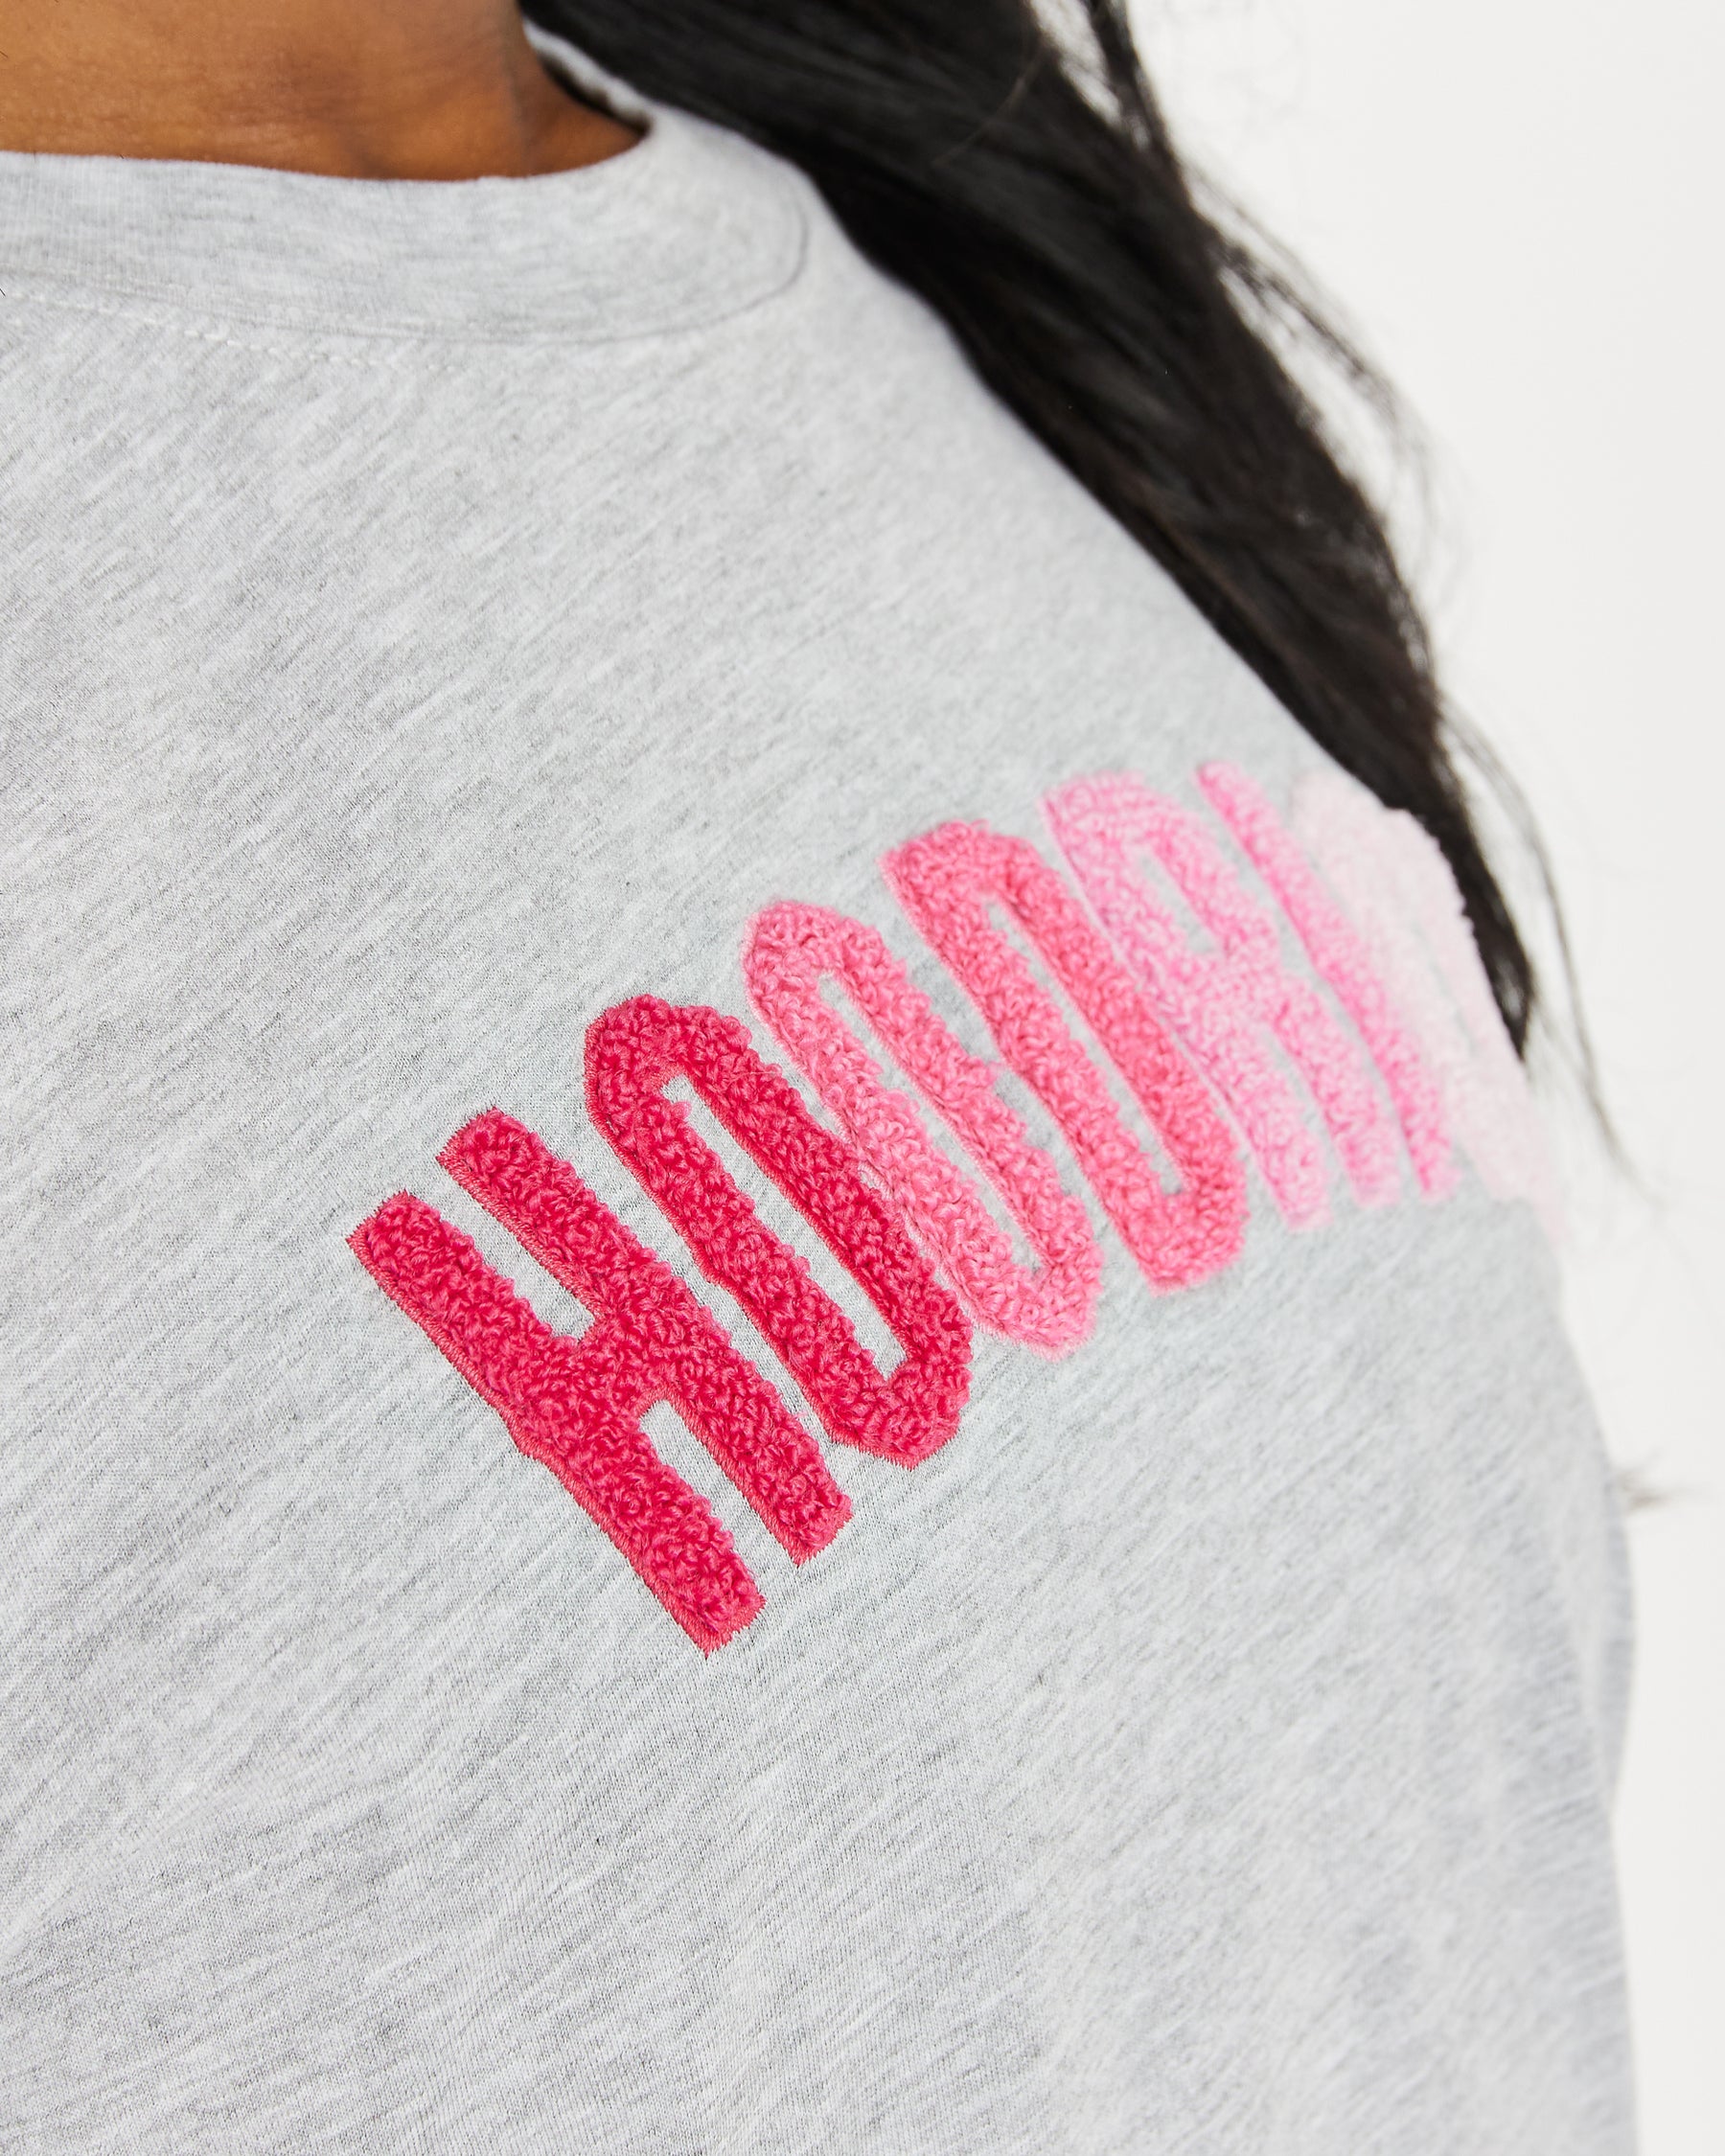 OG Kraze Boyfriend T-shirt - Heather Grey/ Pinks